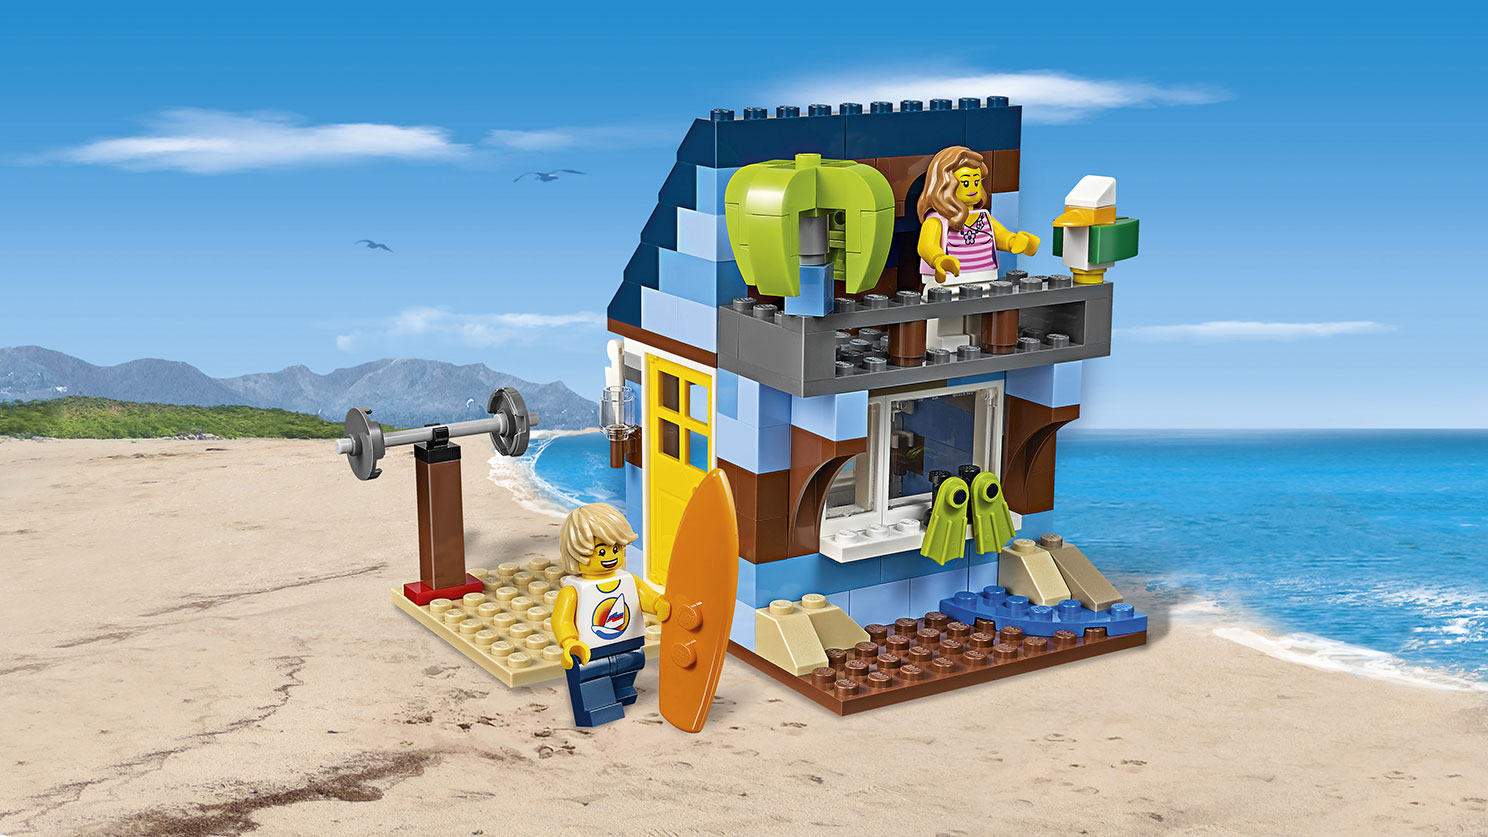 Lego Creator. Отпуск у моря  